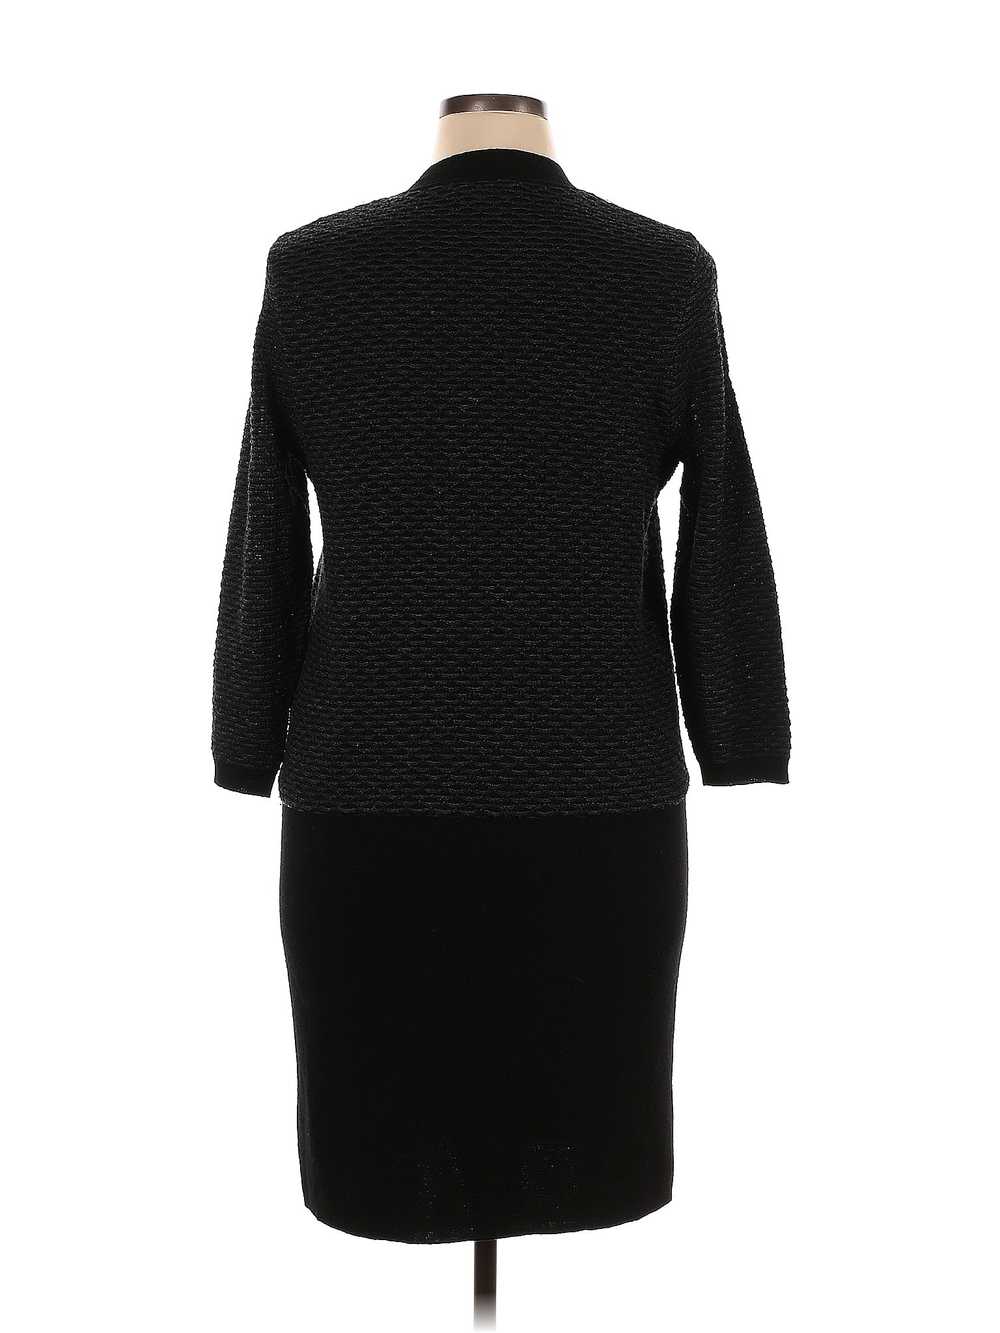 Etcetera Women Black Casual Dress XL - image 2